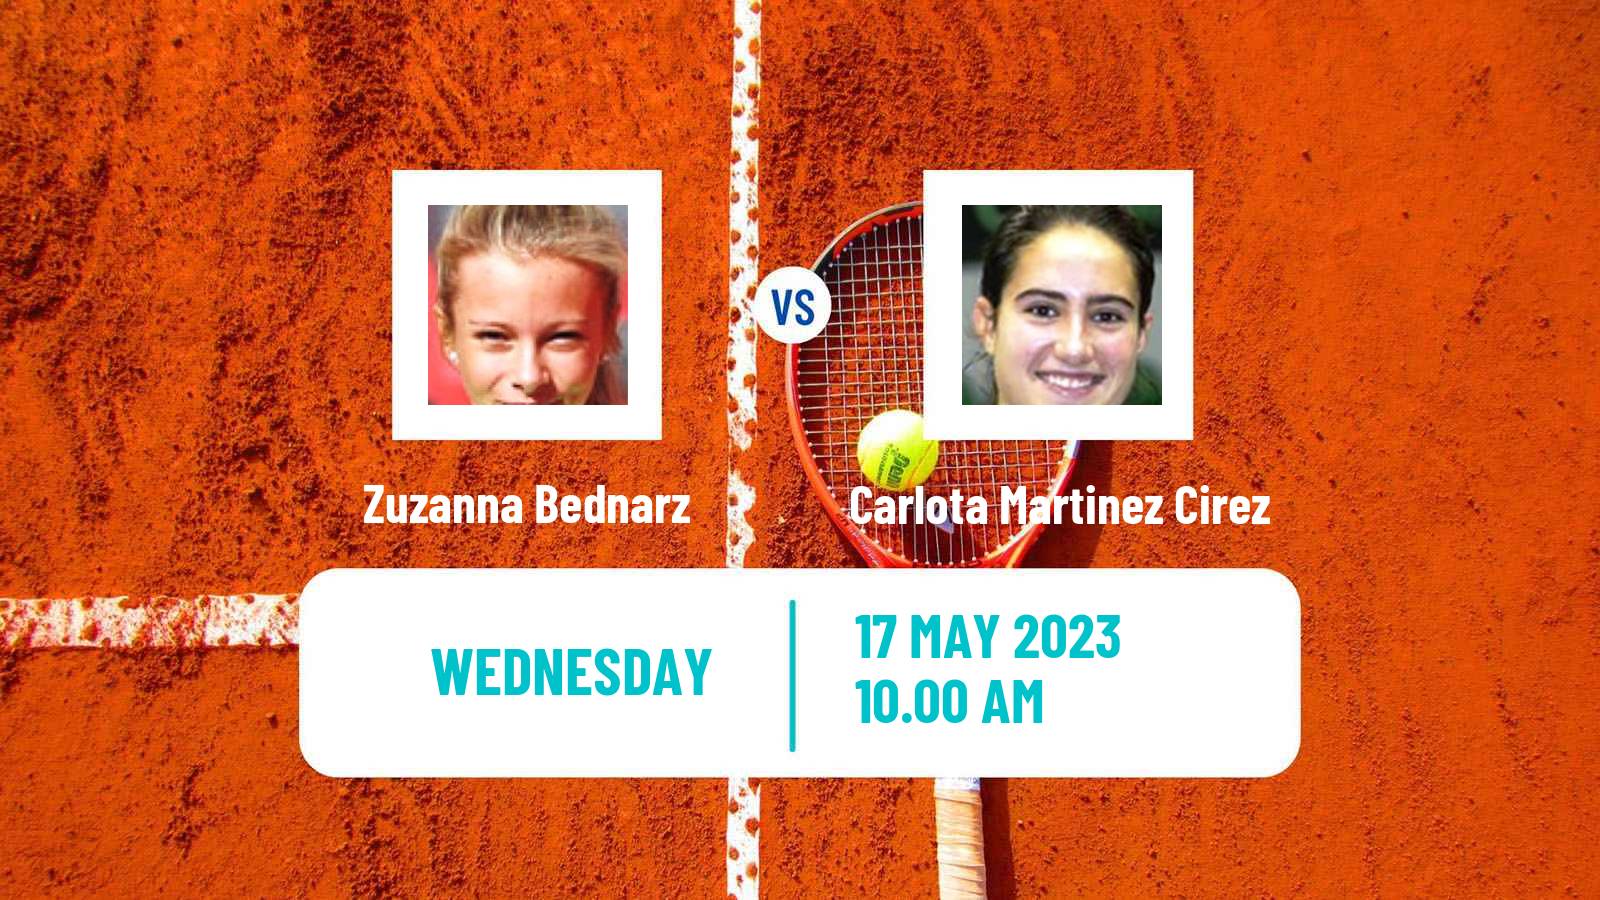 Tennis ITF W25 Kursumlijska Banja Women Zuzanna Bednarz - Carlota Martinez Cirez